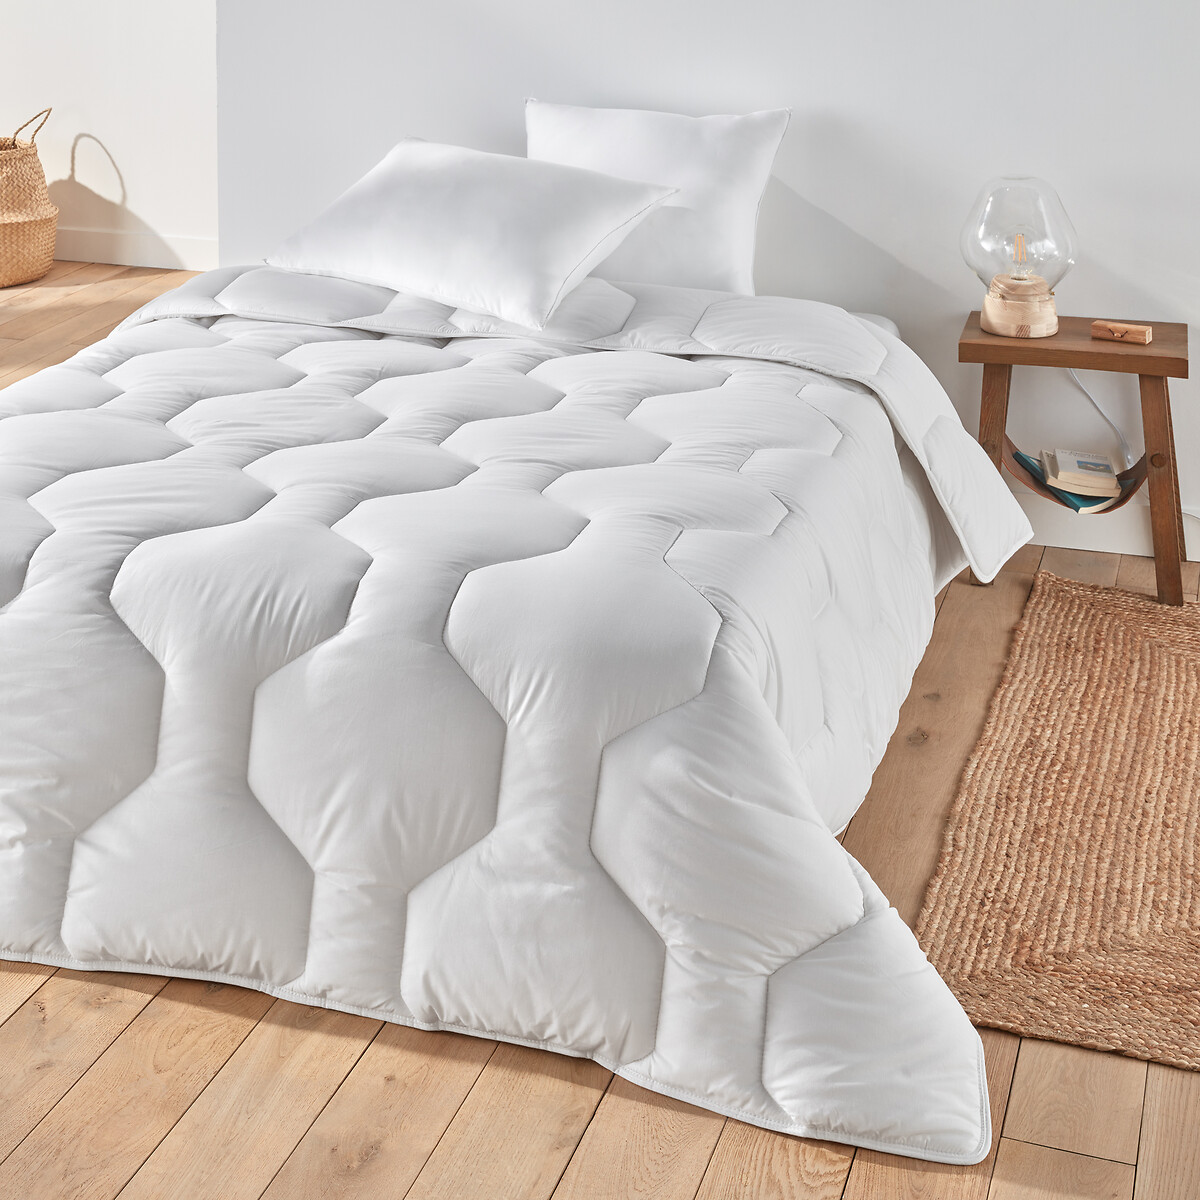 Одеяло TEMPEREE - Дышащее и мягкое 140 x 200 см белый